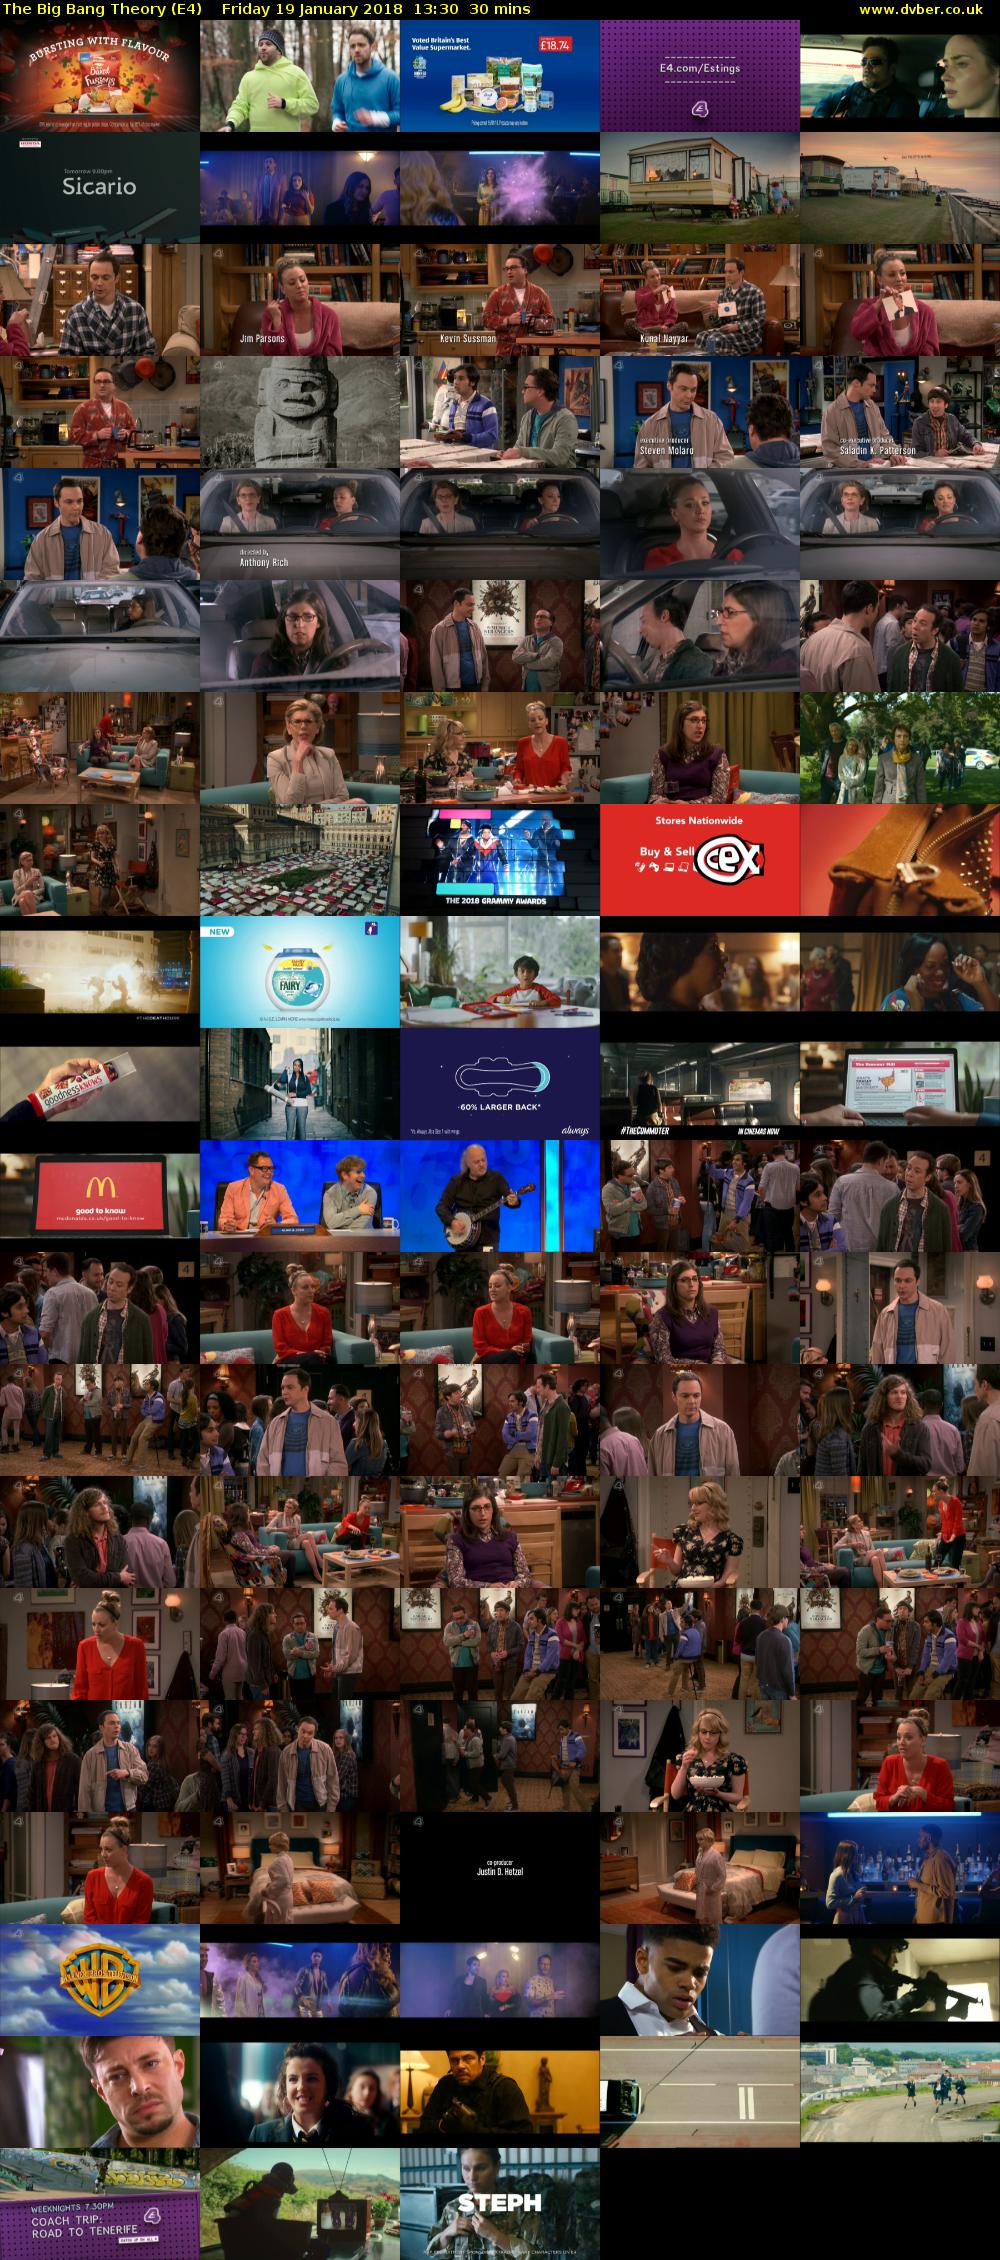 The Big Bang Theory (E4) Friday 19 January 2018 13:30 - 14:00